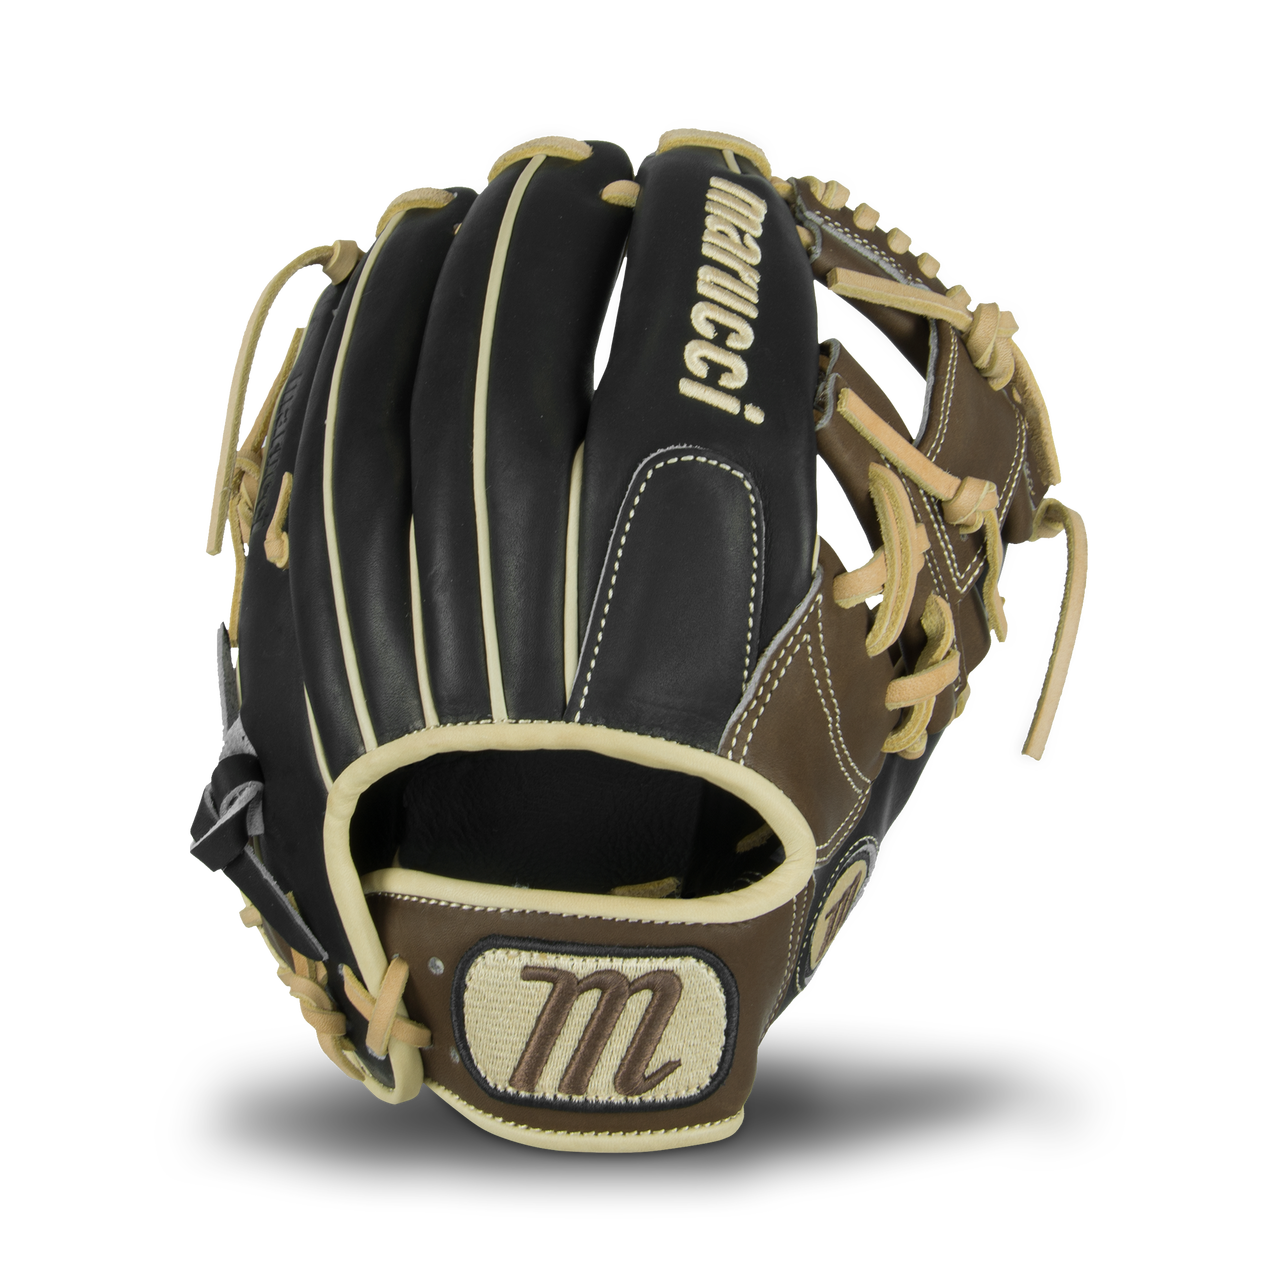 Marucci HTG Series MFGHG1125I 11.25 inch Infield Baseball Glove